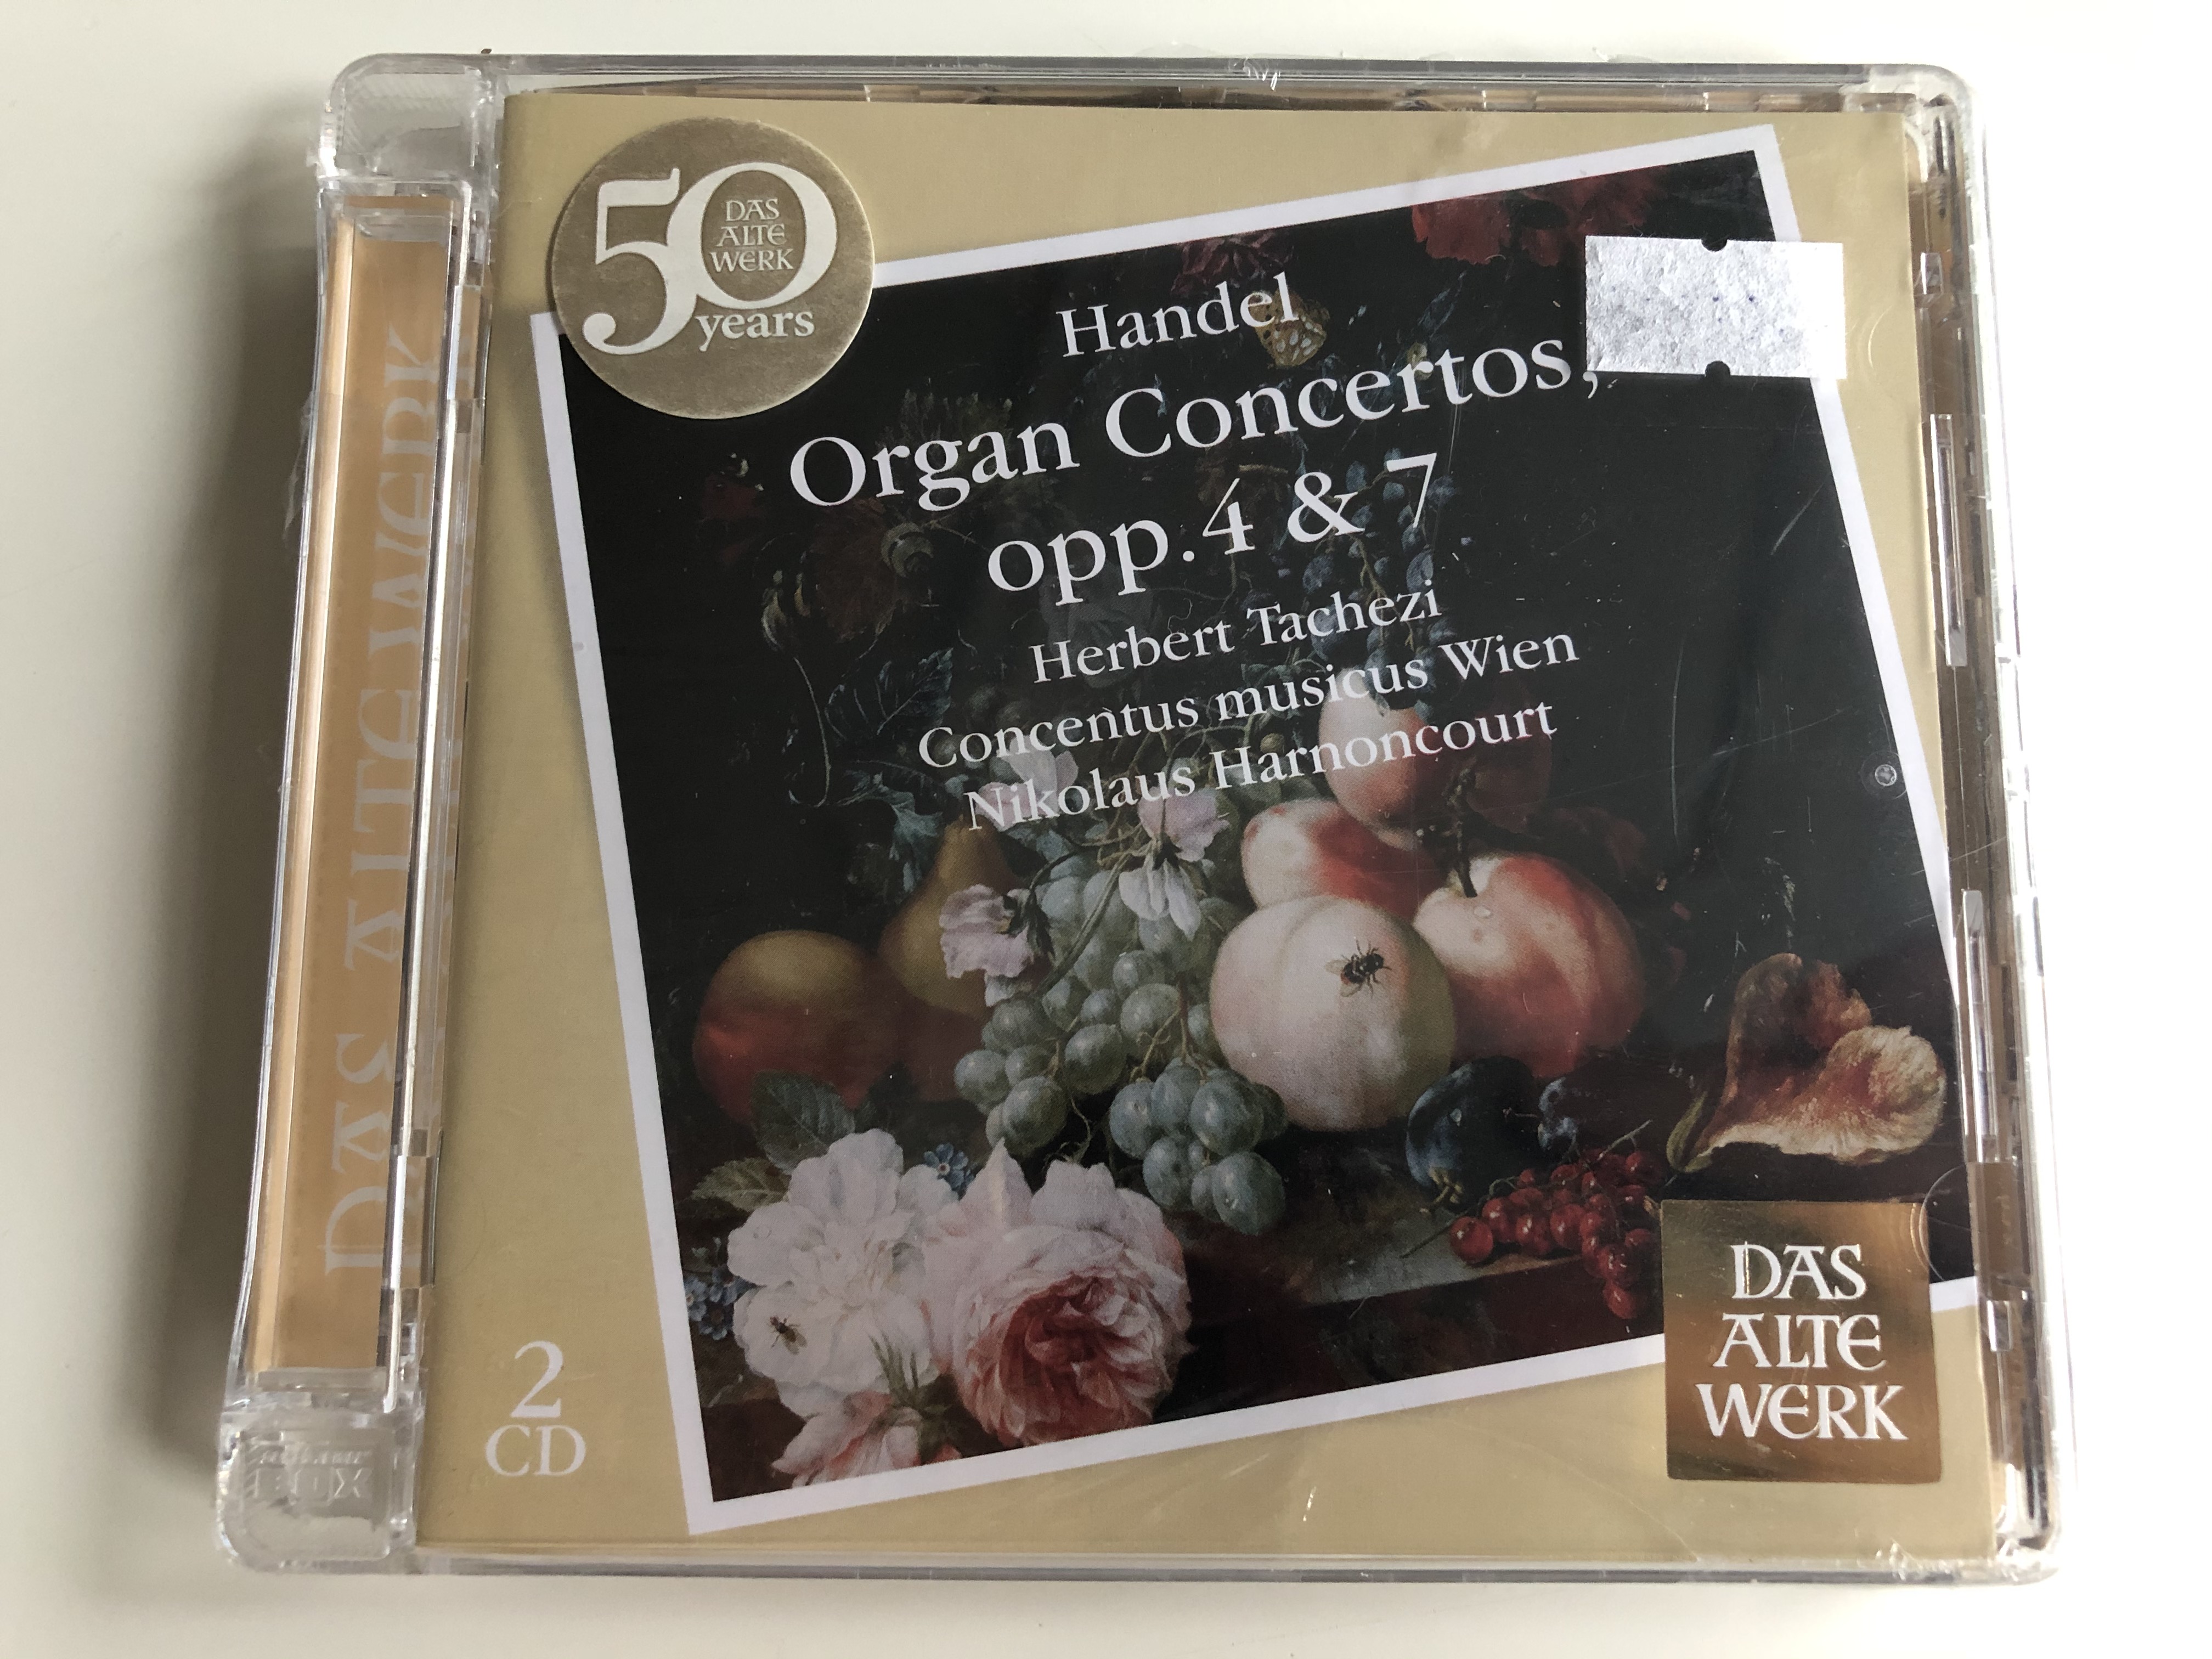 handel-organ-concertos-opp.-4-7-herbert-tachezi-concentus-musicus-wien-nikolaus-harnoncourt-das-alte-werk-teldec-classics-2x-audio-cd-2009-2564-69051-6-1-.jpg